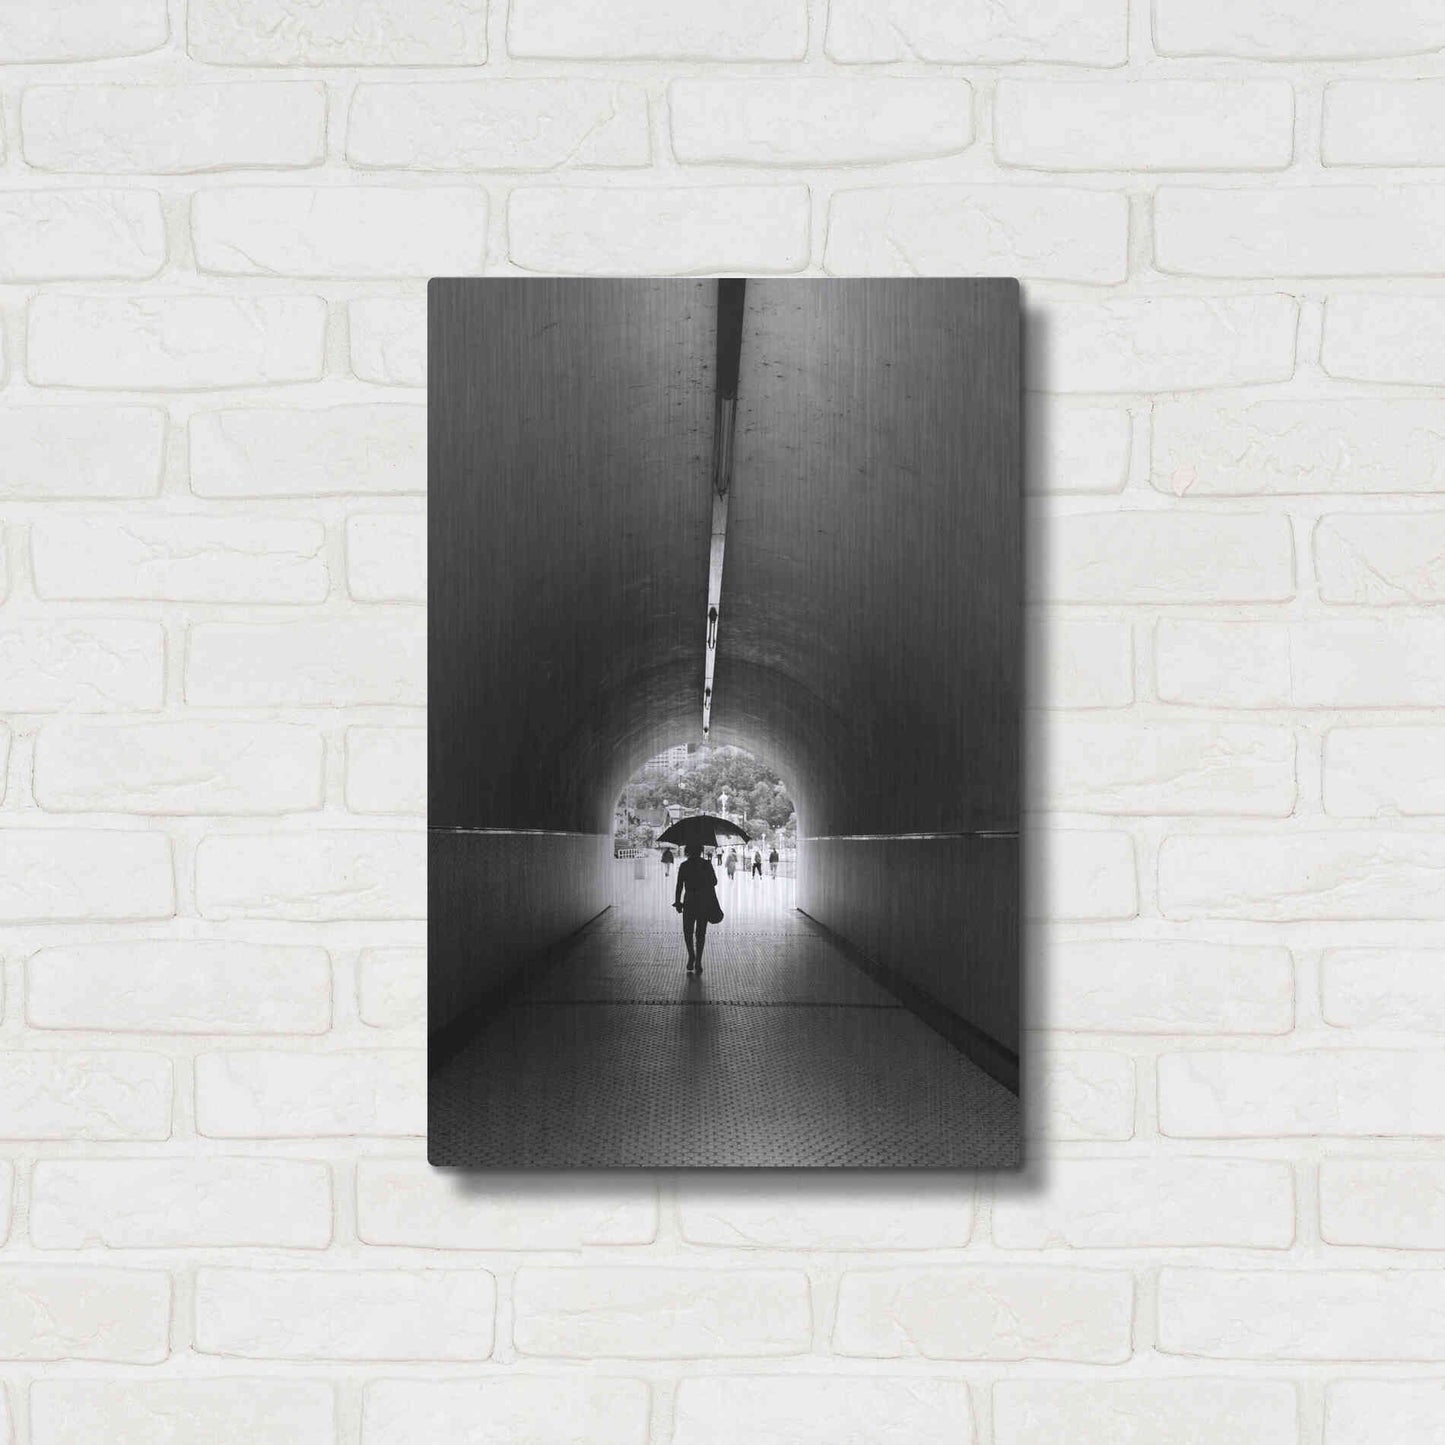 Luxe Metal Art ' Lady With Umbrella' by Robin Vandenabeele, Metal Wall Art,16x24